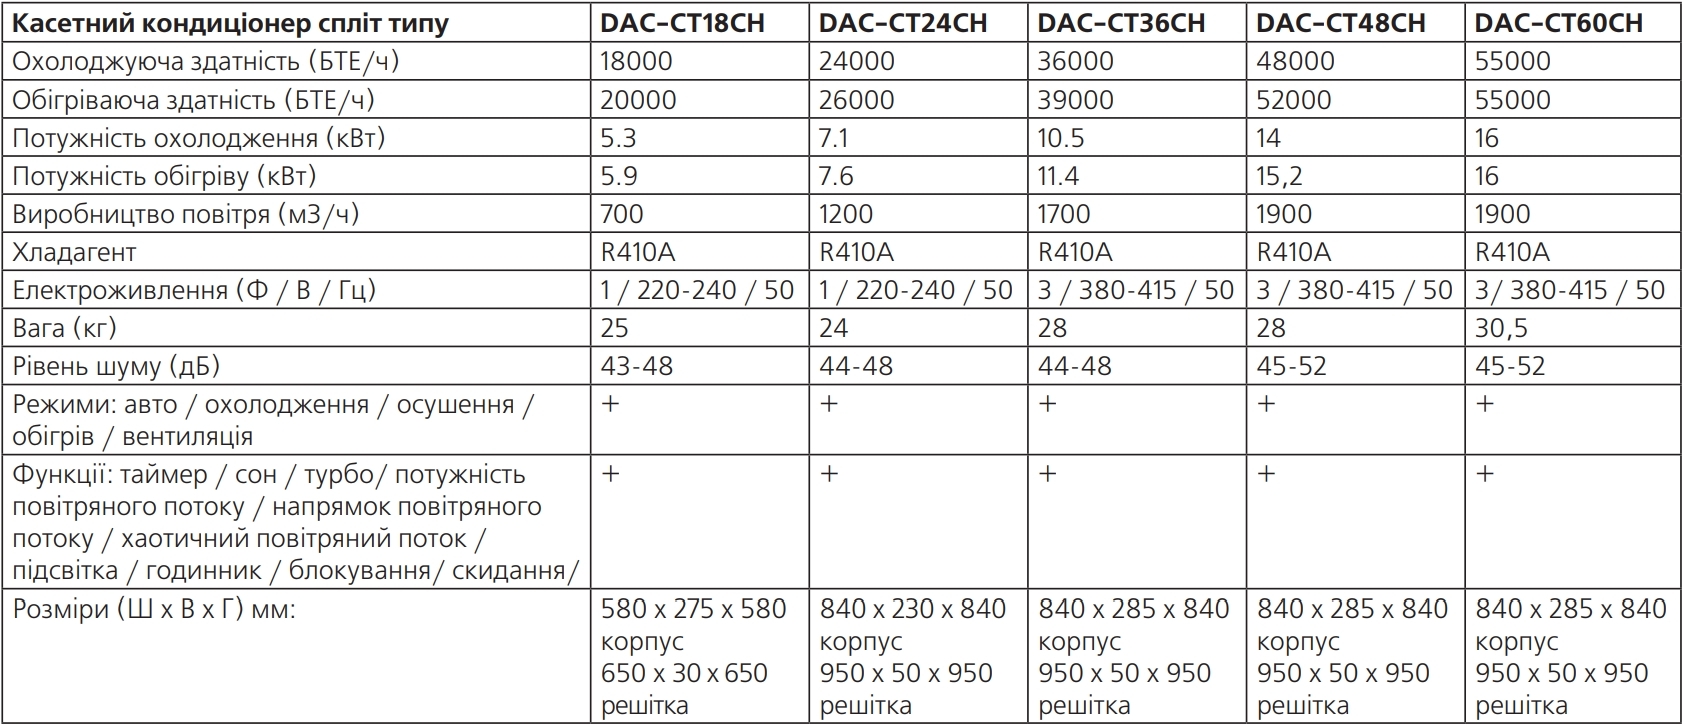 Digital DAC-CT36CH Характеристики